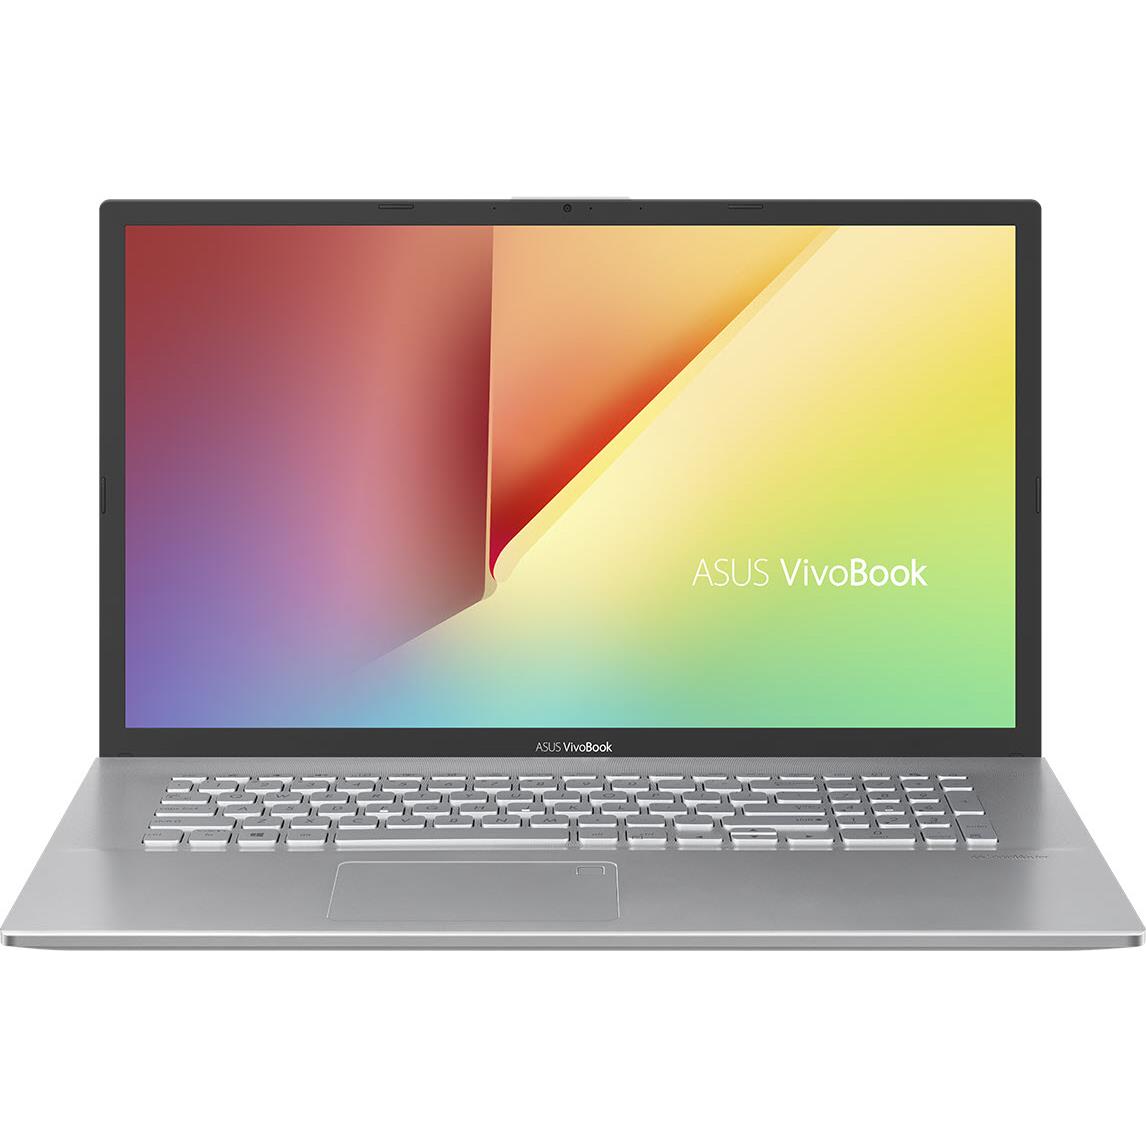 asus vivobook m712 17.3" full hd laptop (256gb) [ryzen 5]